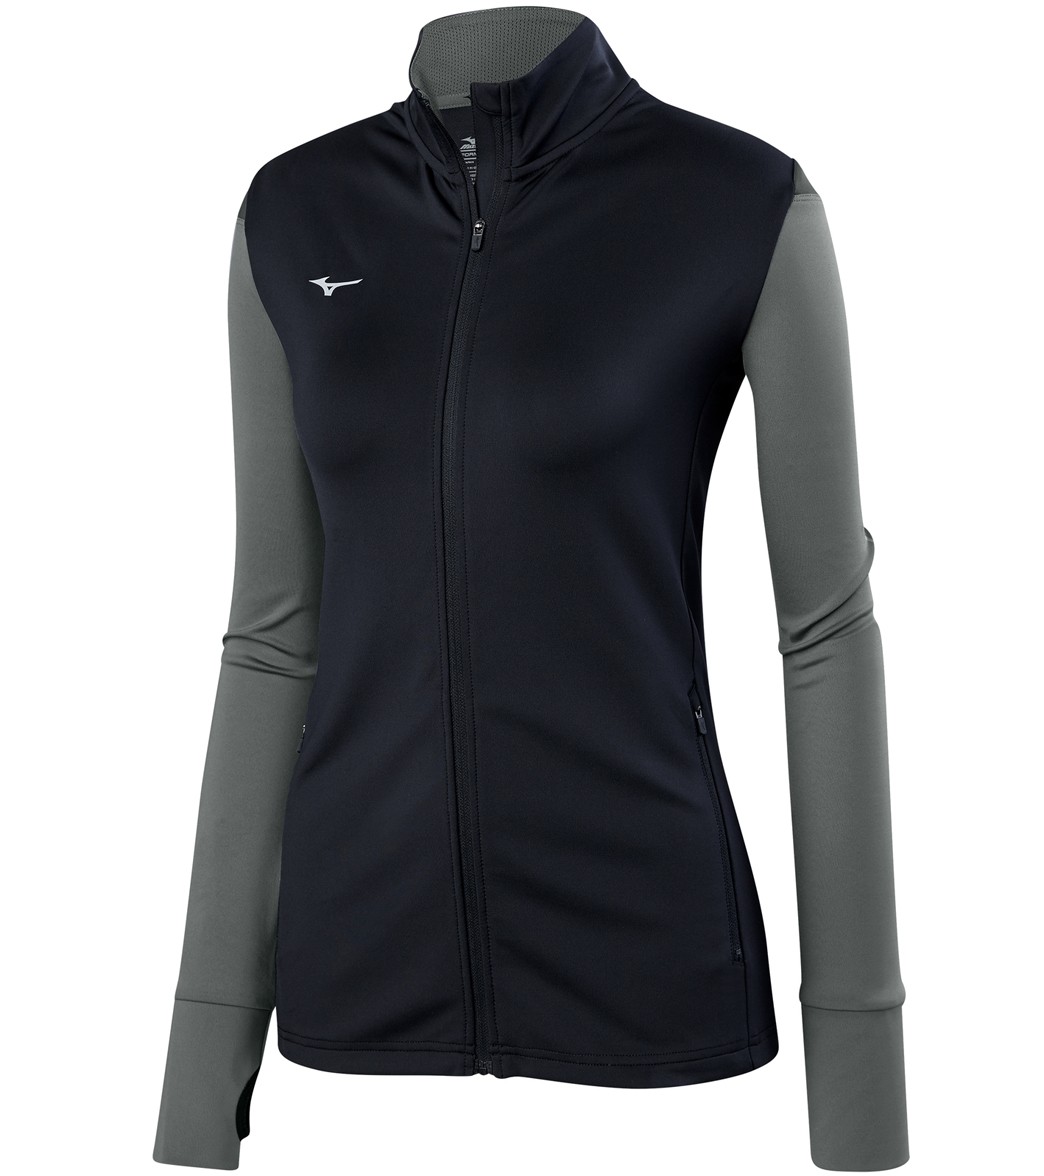 Mizuno Girls' Horizon Full Zip Volleyball Jacket - Black/Grey/Charcoal Medium Cotton/Polyester - Swimoutlet.com